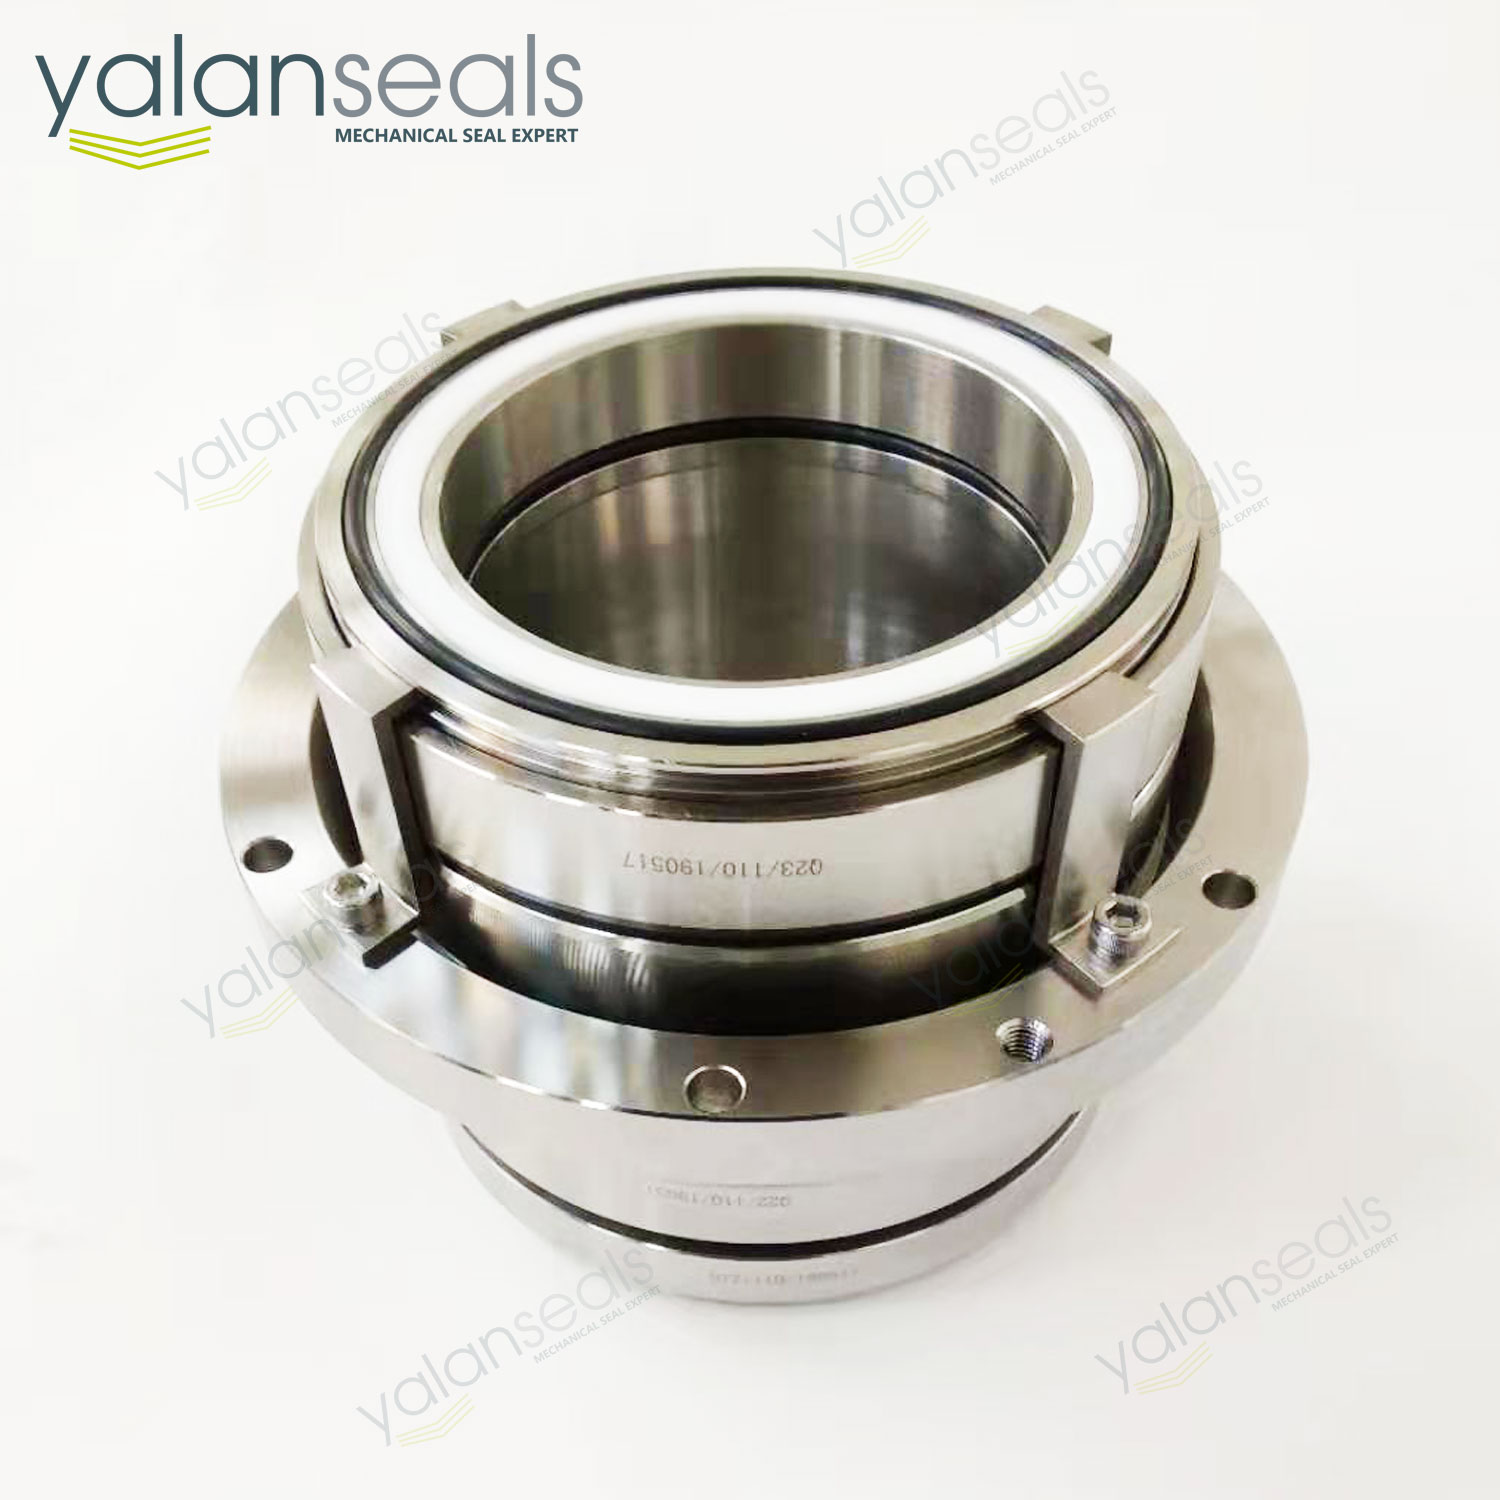 YALAN LP-D-110 Cartridge Mechanical Seal for Paper Pulp Pumps and Sewage Pumps